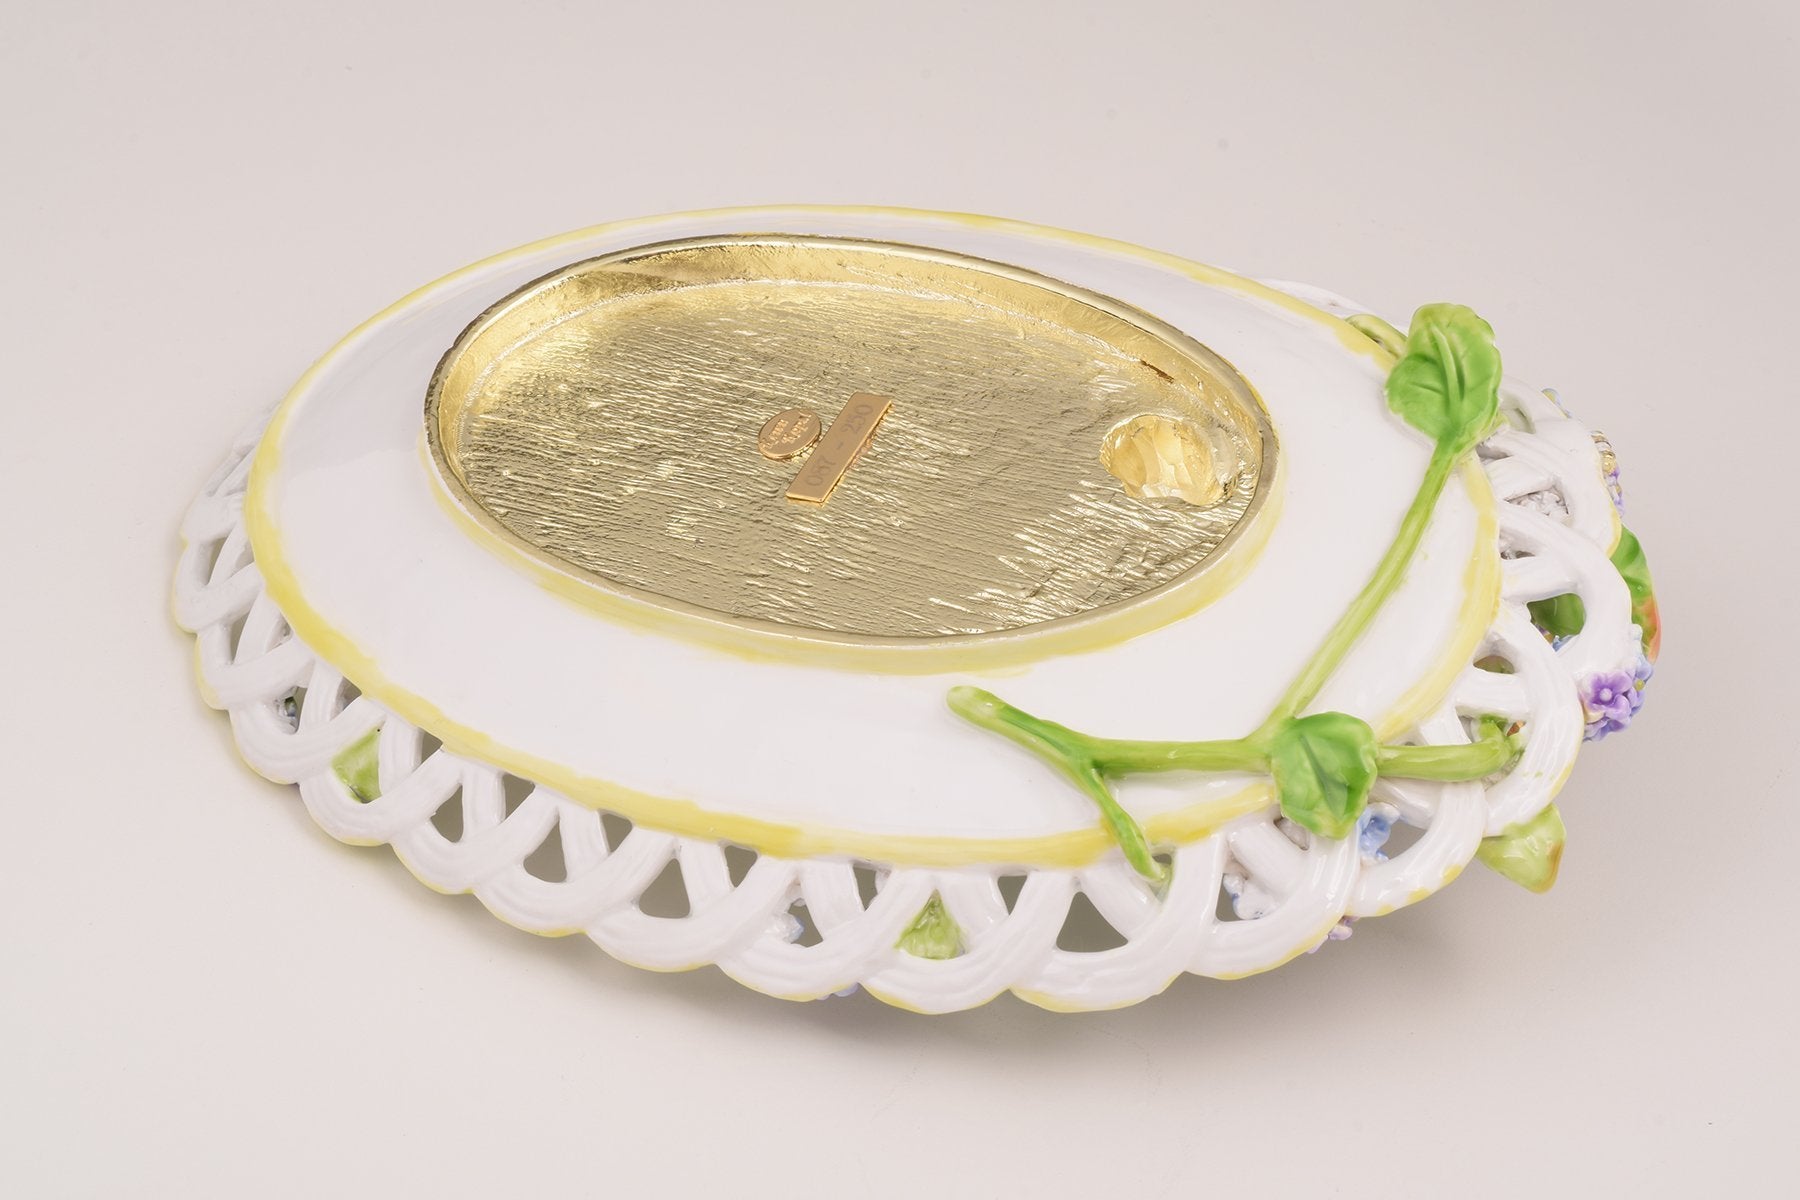 Keren Kopal White Plate Decorated Trinket Box  179.00